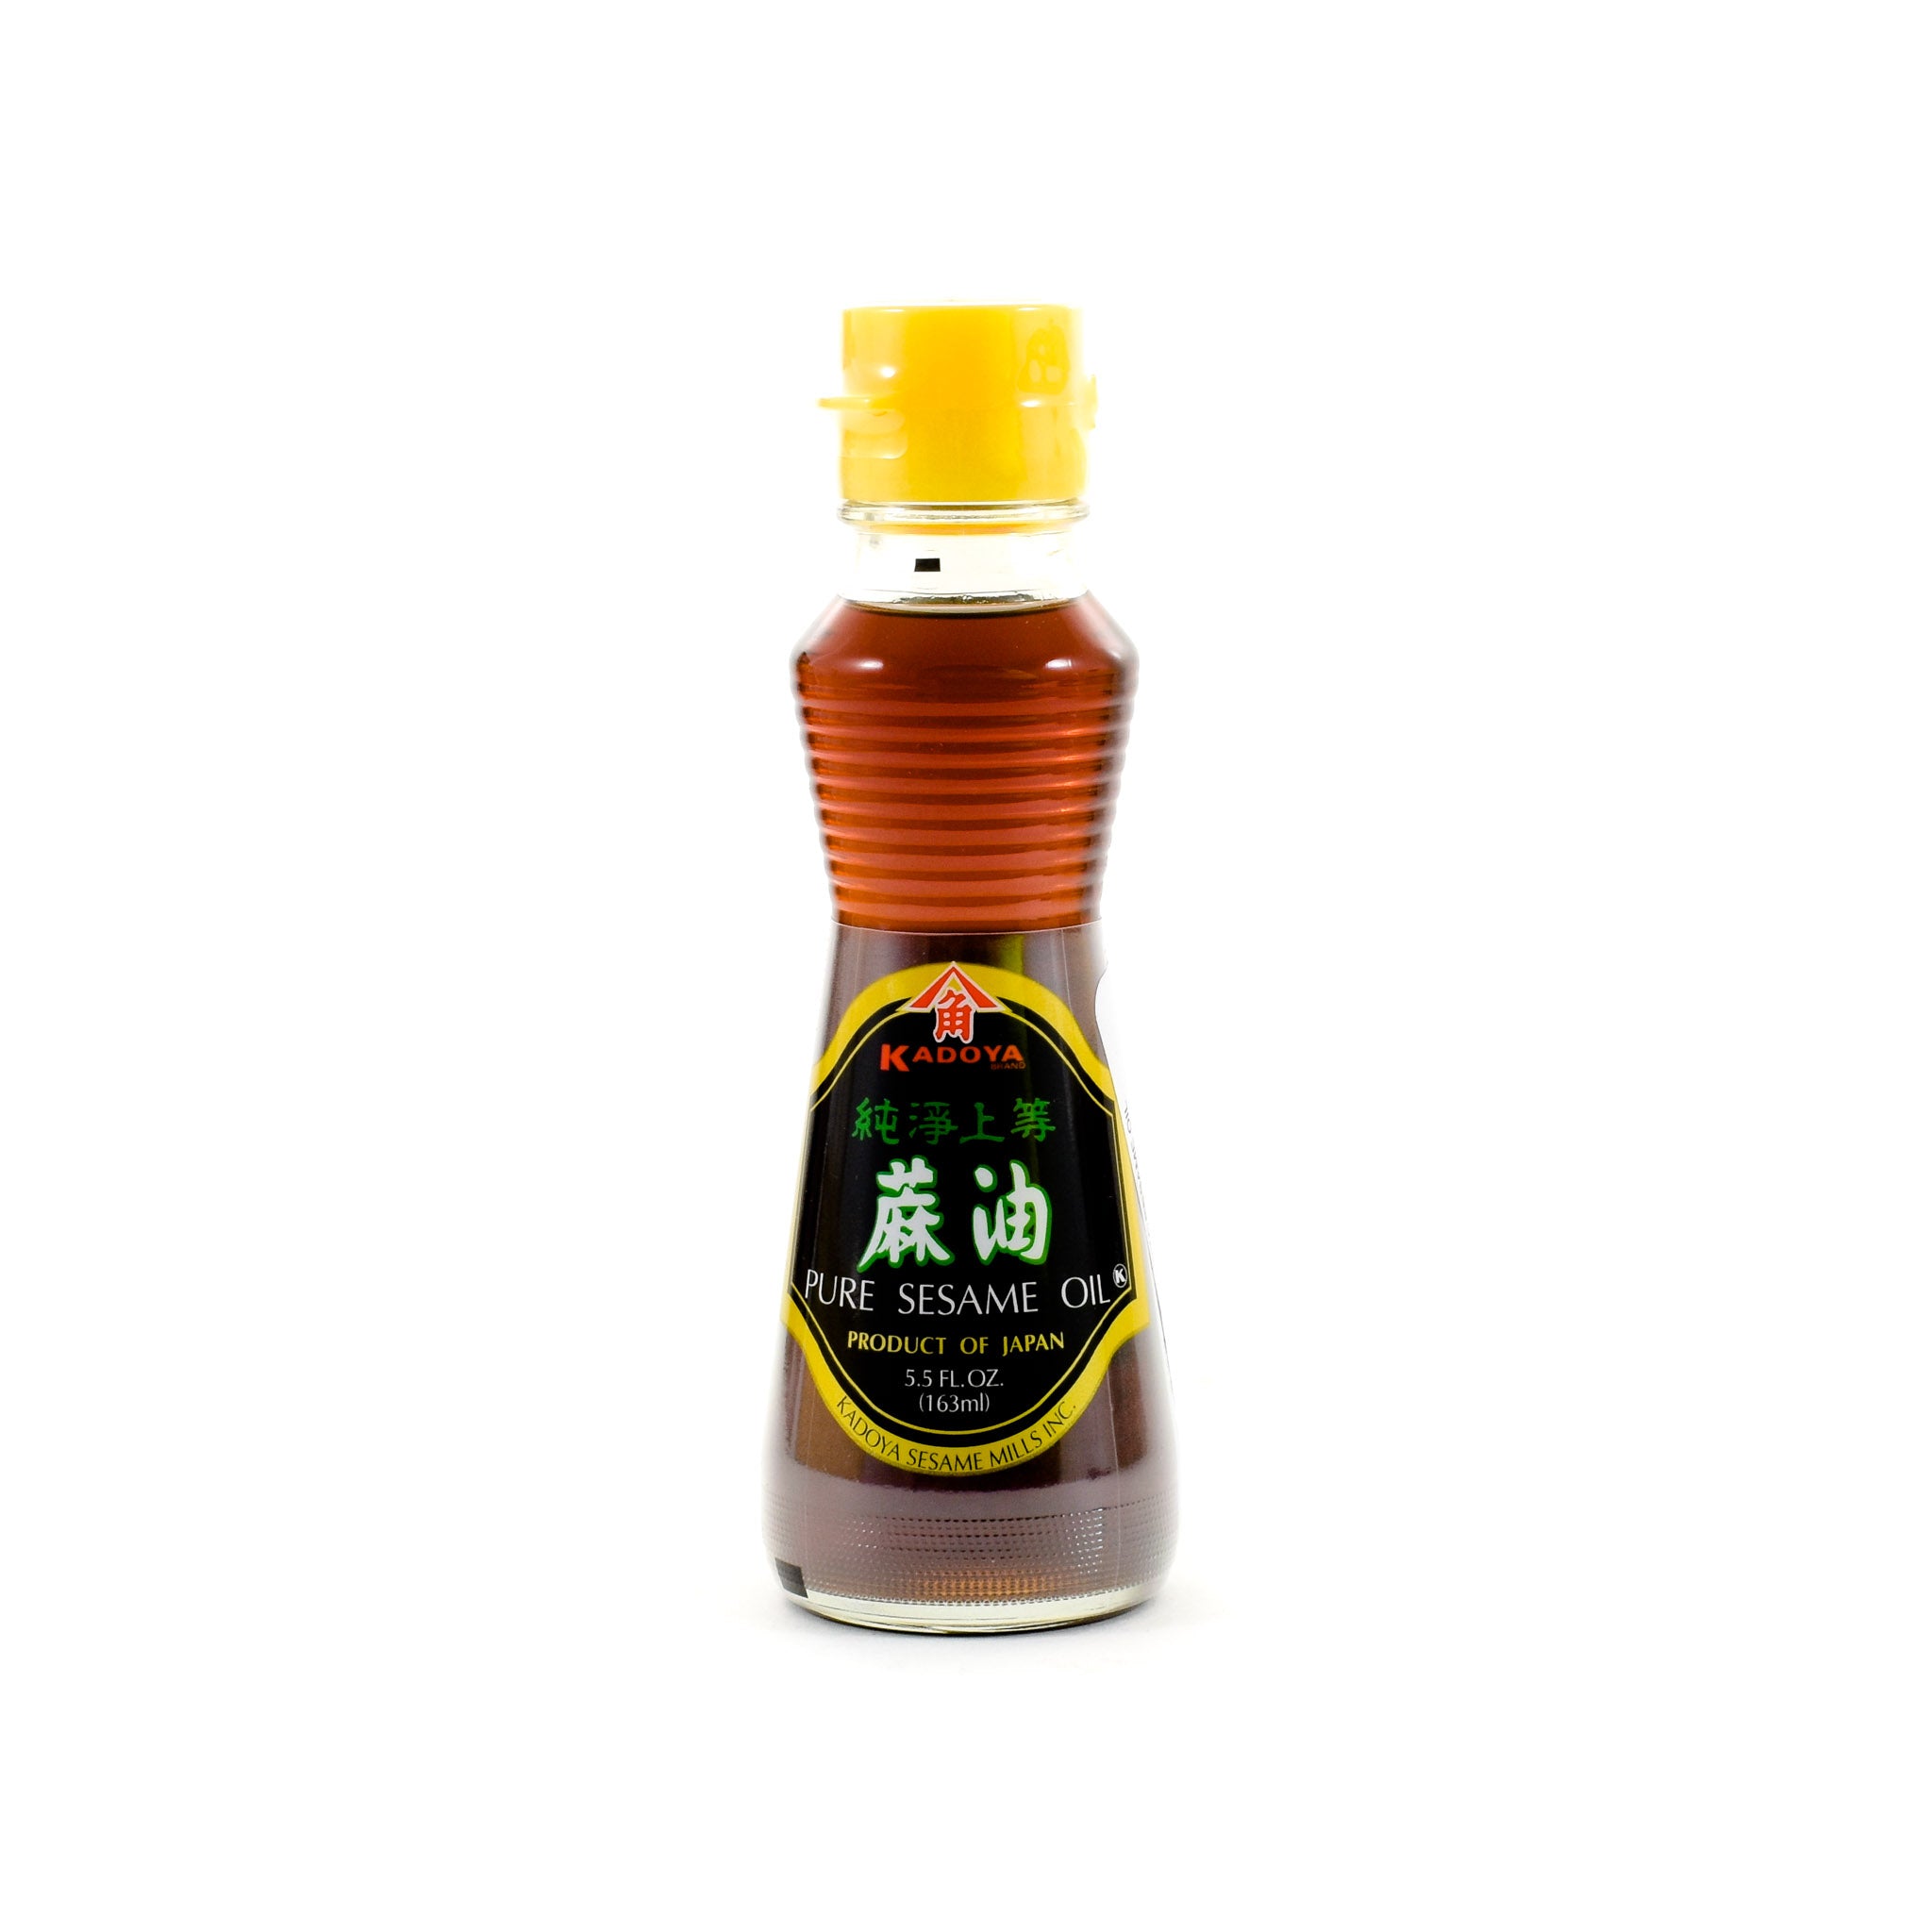 Kadoya Japanese Pure Sesame Oil 163ml